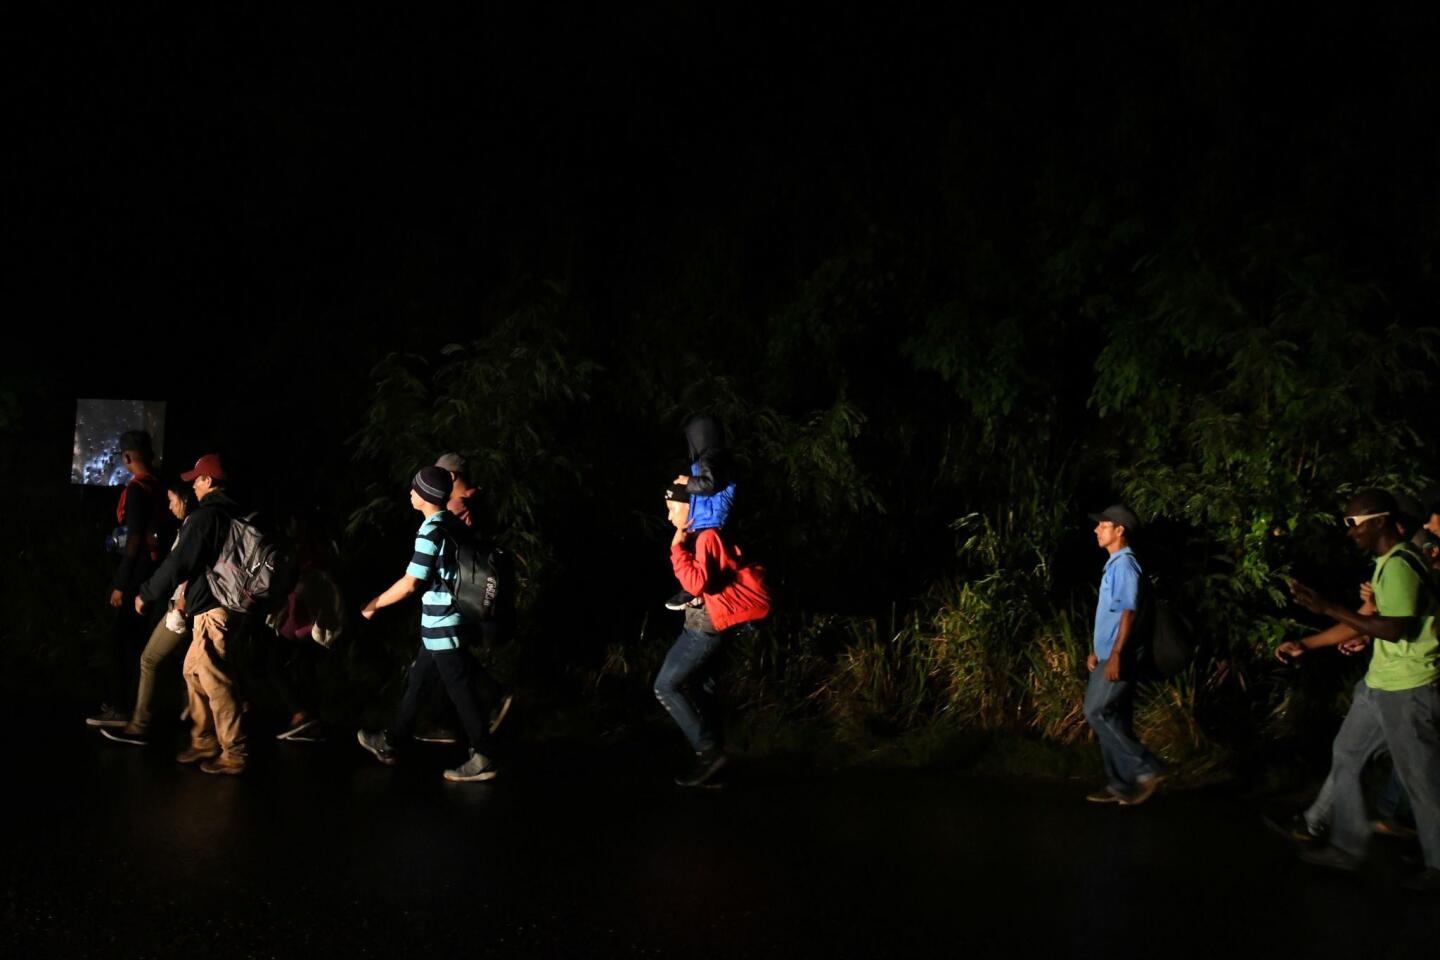 Migrantes hondureños